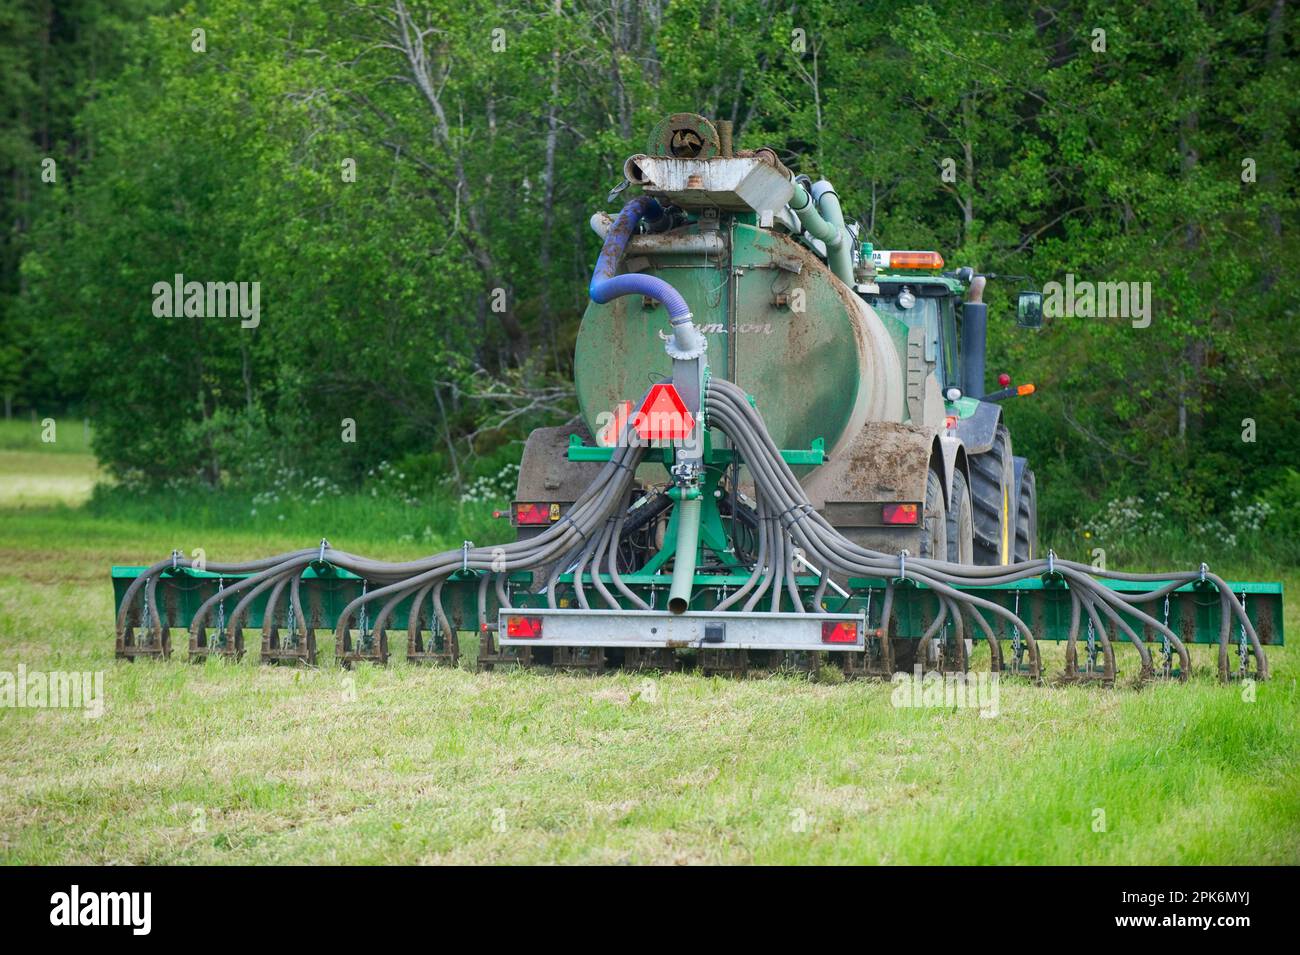 John Deere 8530 tractor with Samson vacuum slurry tanker and slurry injector, injecting slurry in the field, Alunda, Uppsala, Sweden Stock Photo